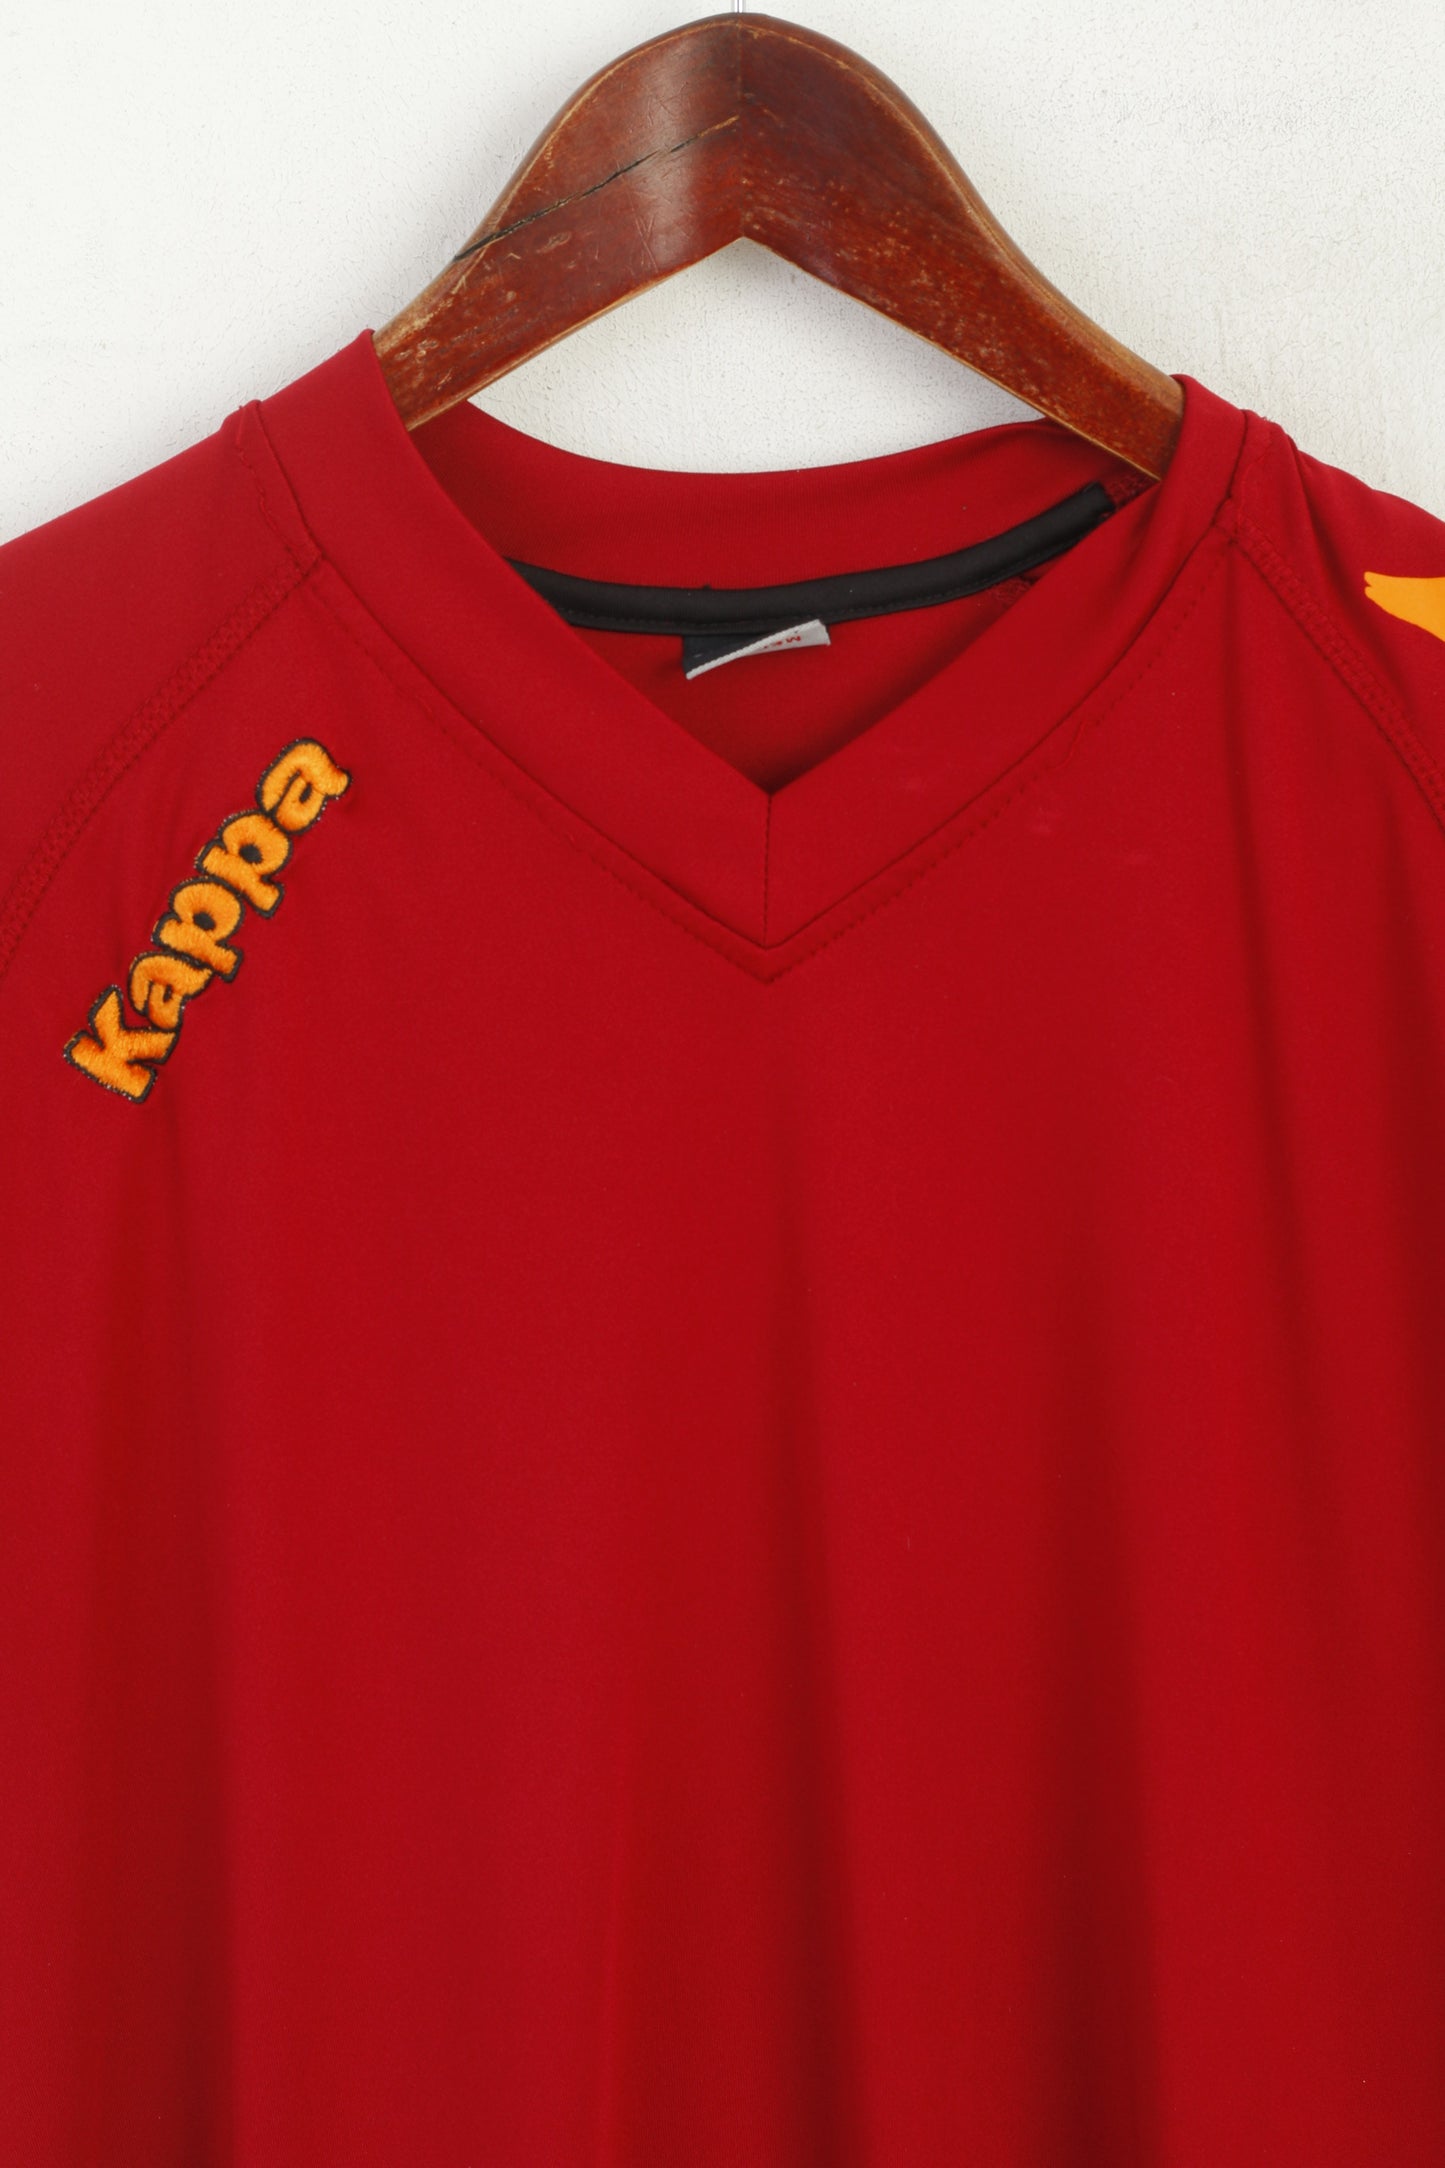 Kappa Men M Shirt Burgundy Sportswear Vintage V Neck Sport Jersey Top